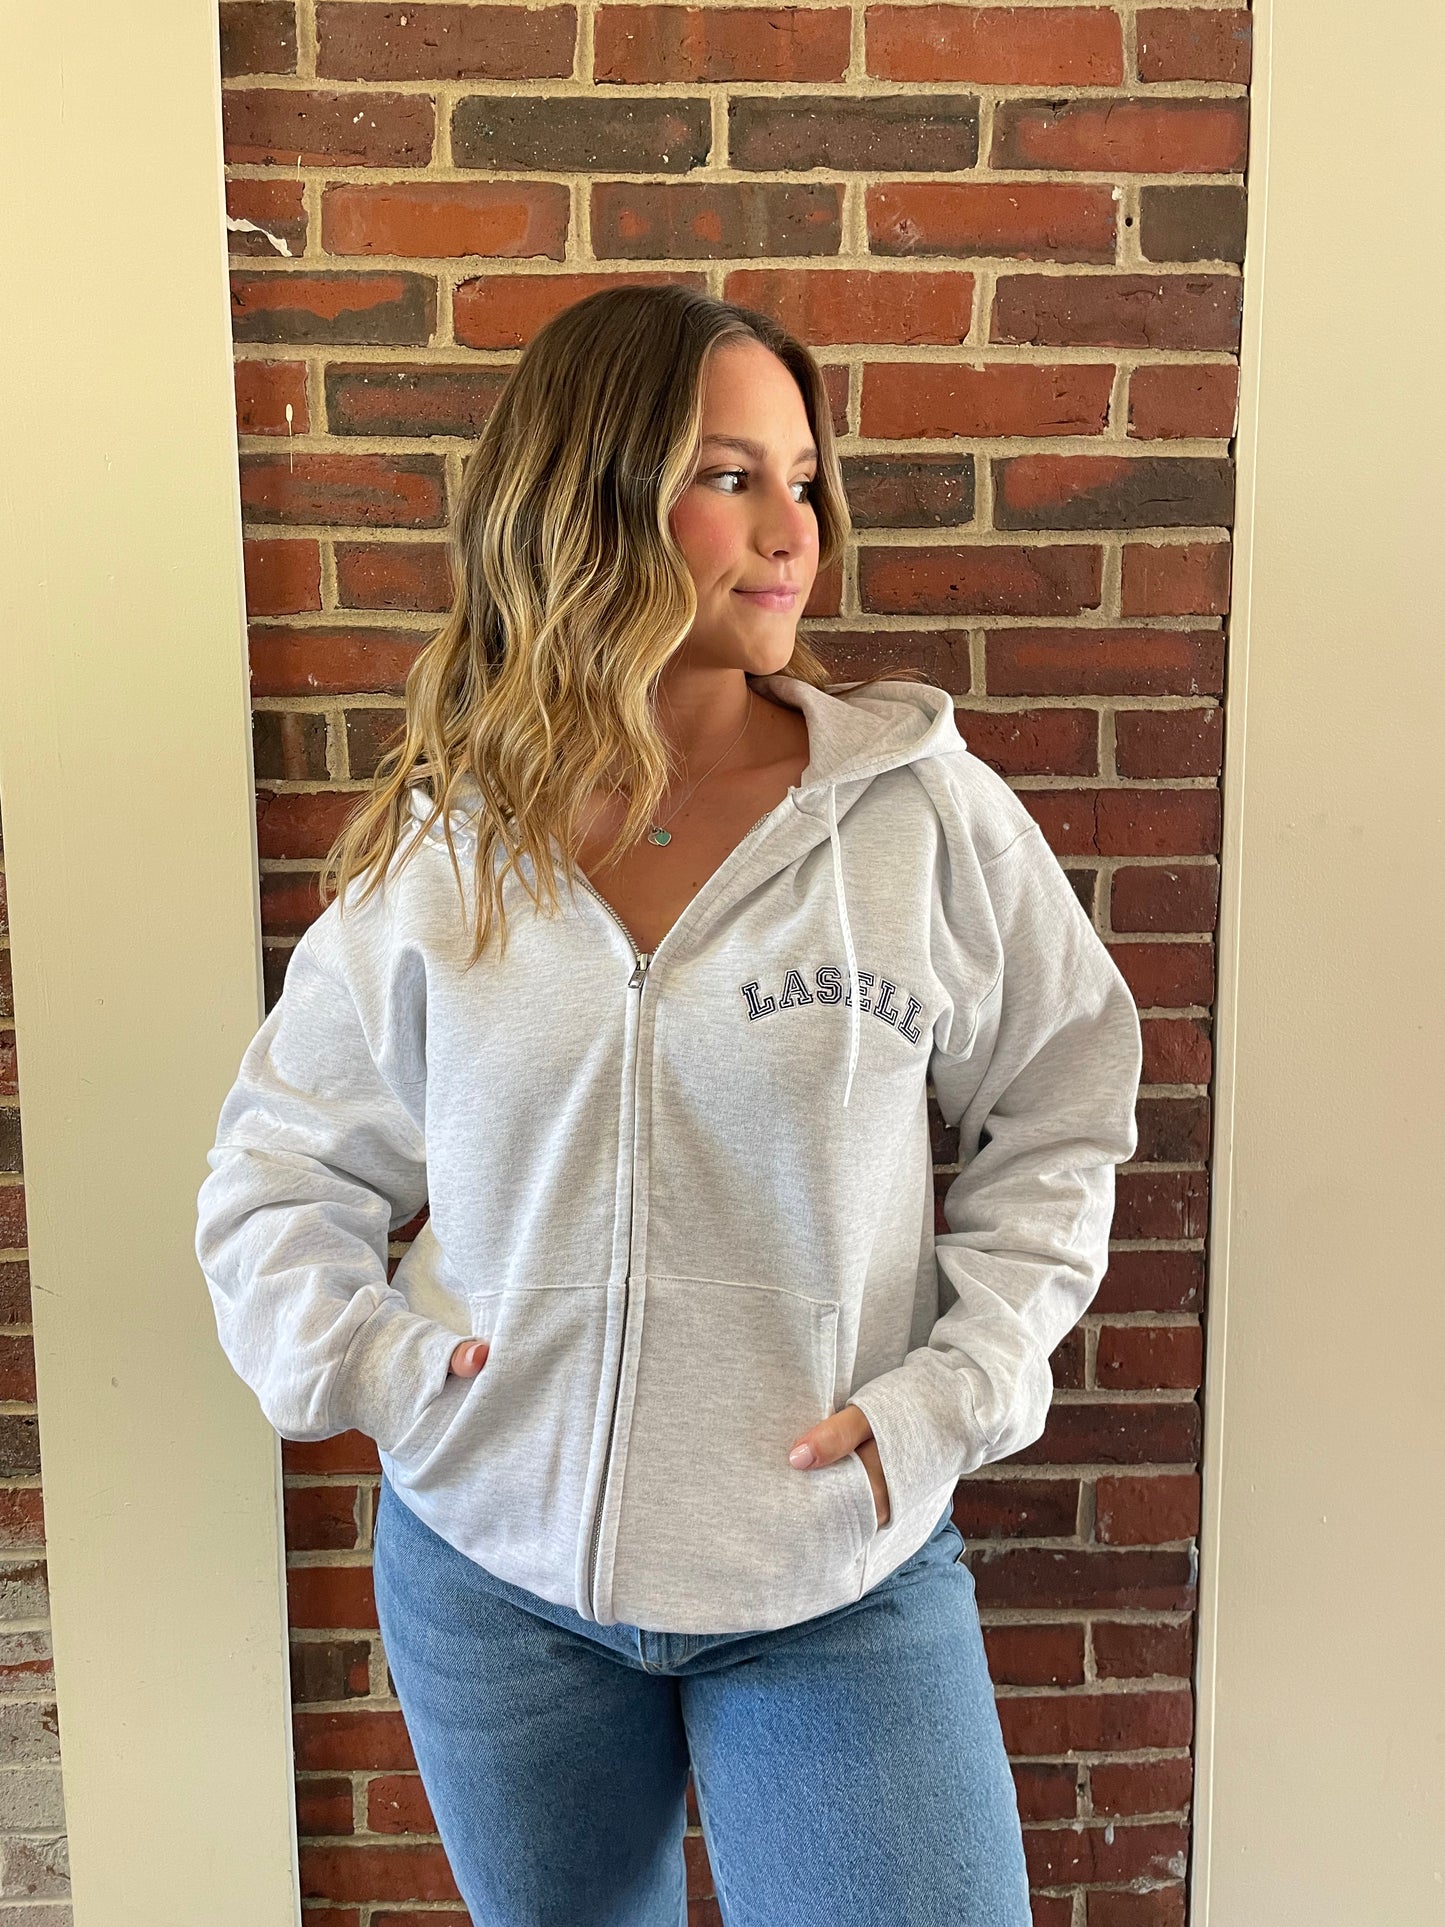 Lasell Heather Grey Embroidered Zip Up Sweatshirt